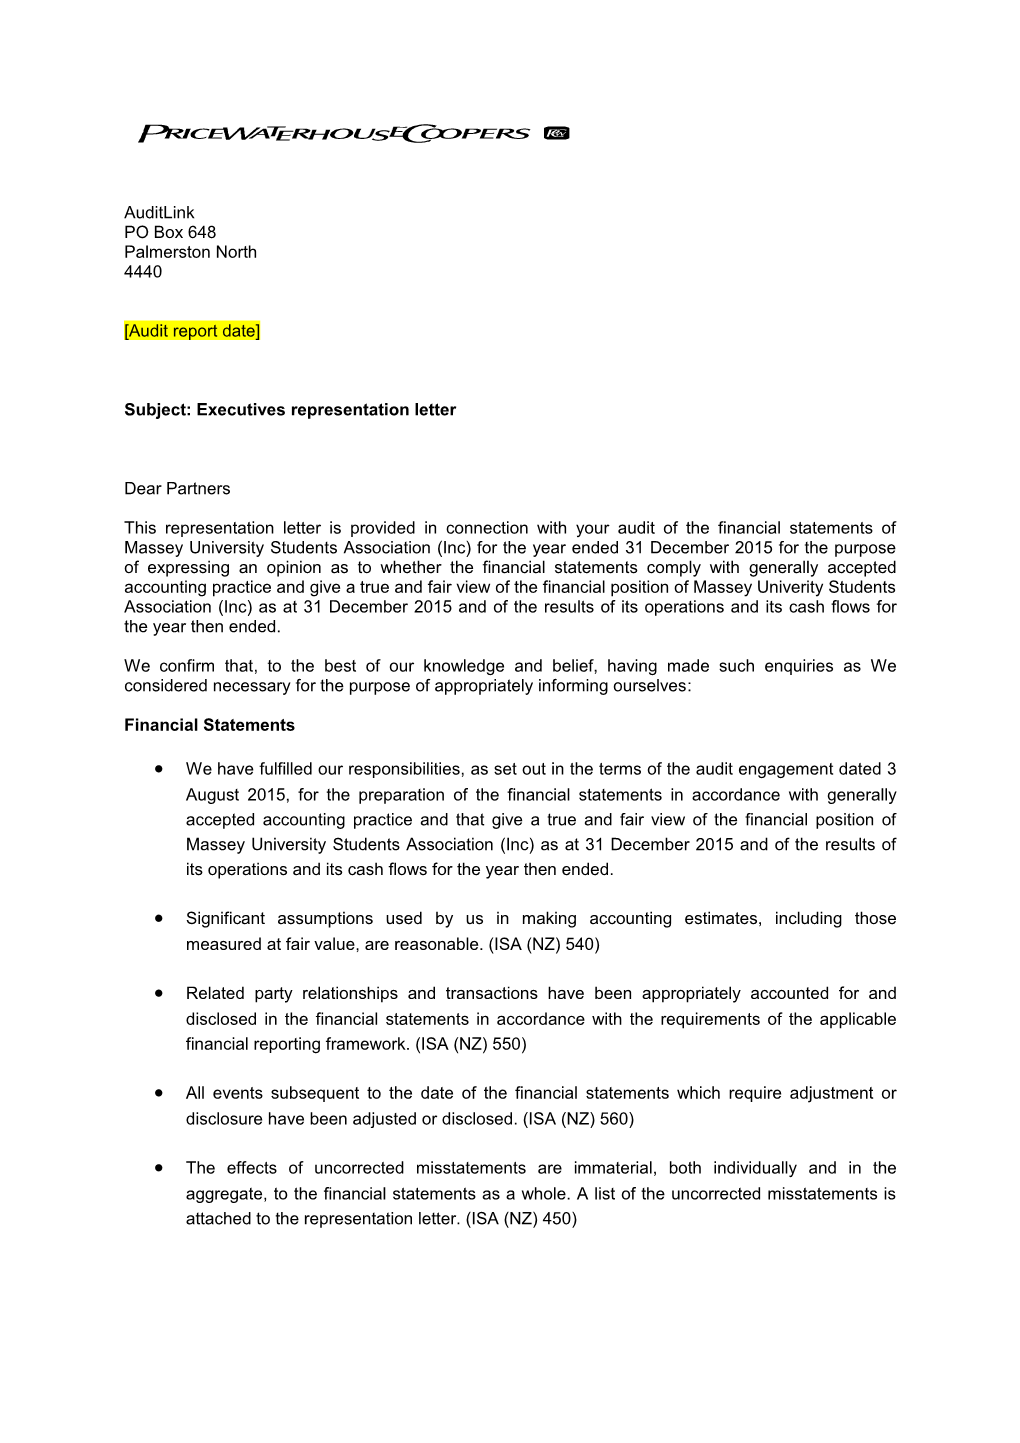 Subject: Executives Representation Letter